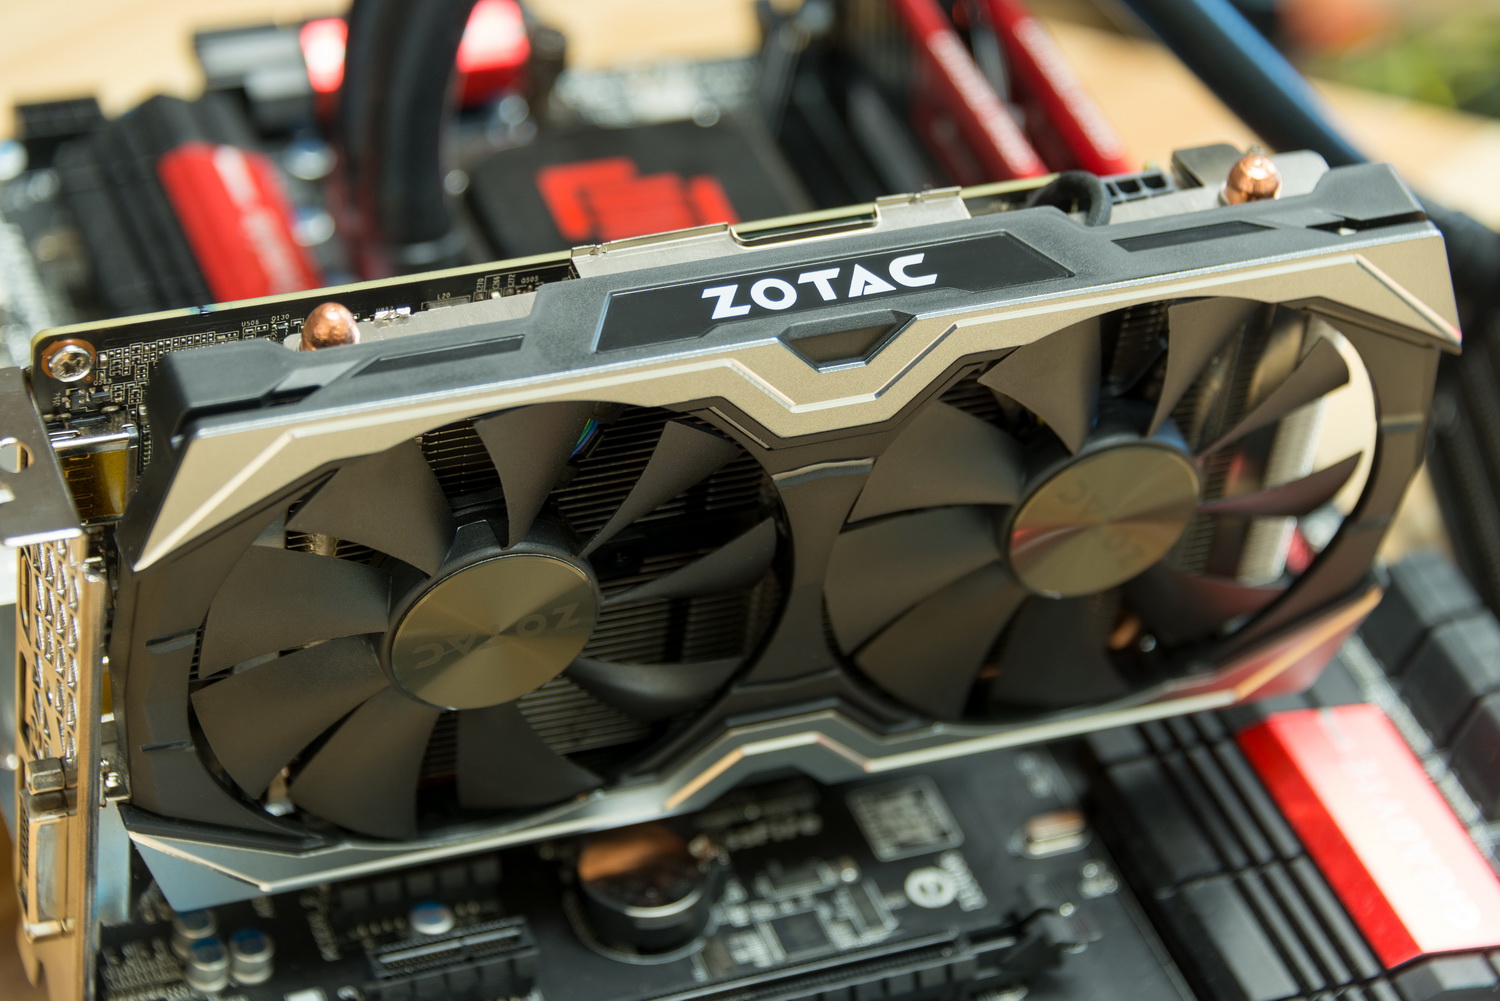 ZOTAC GeForce GTX 1060 AMP! Review | Trends